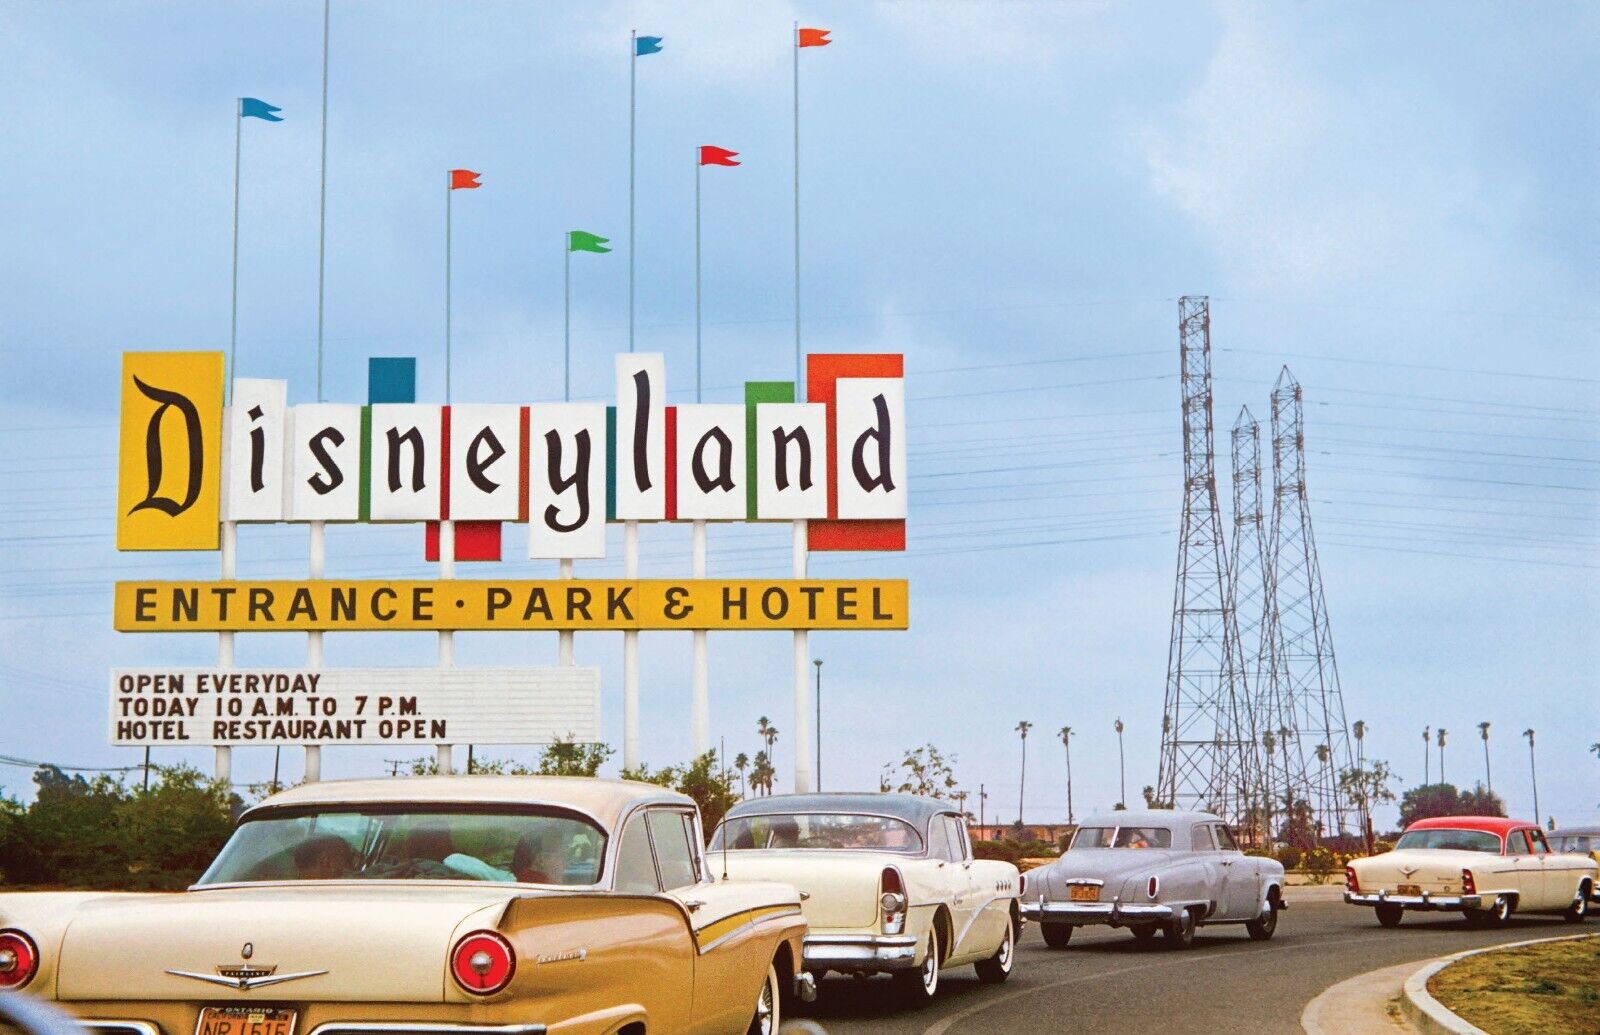 Disneyland Entrance Park & Hotel Marquee Sign 1955 Retro Poster Print Disney